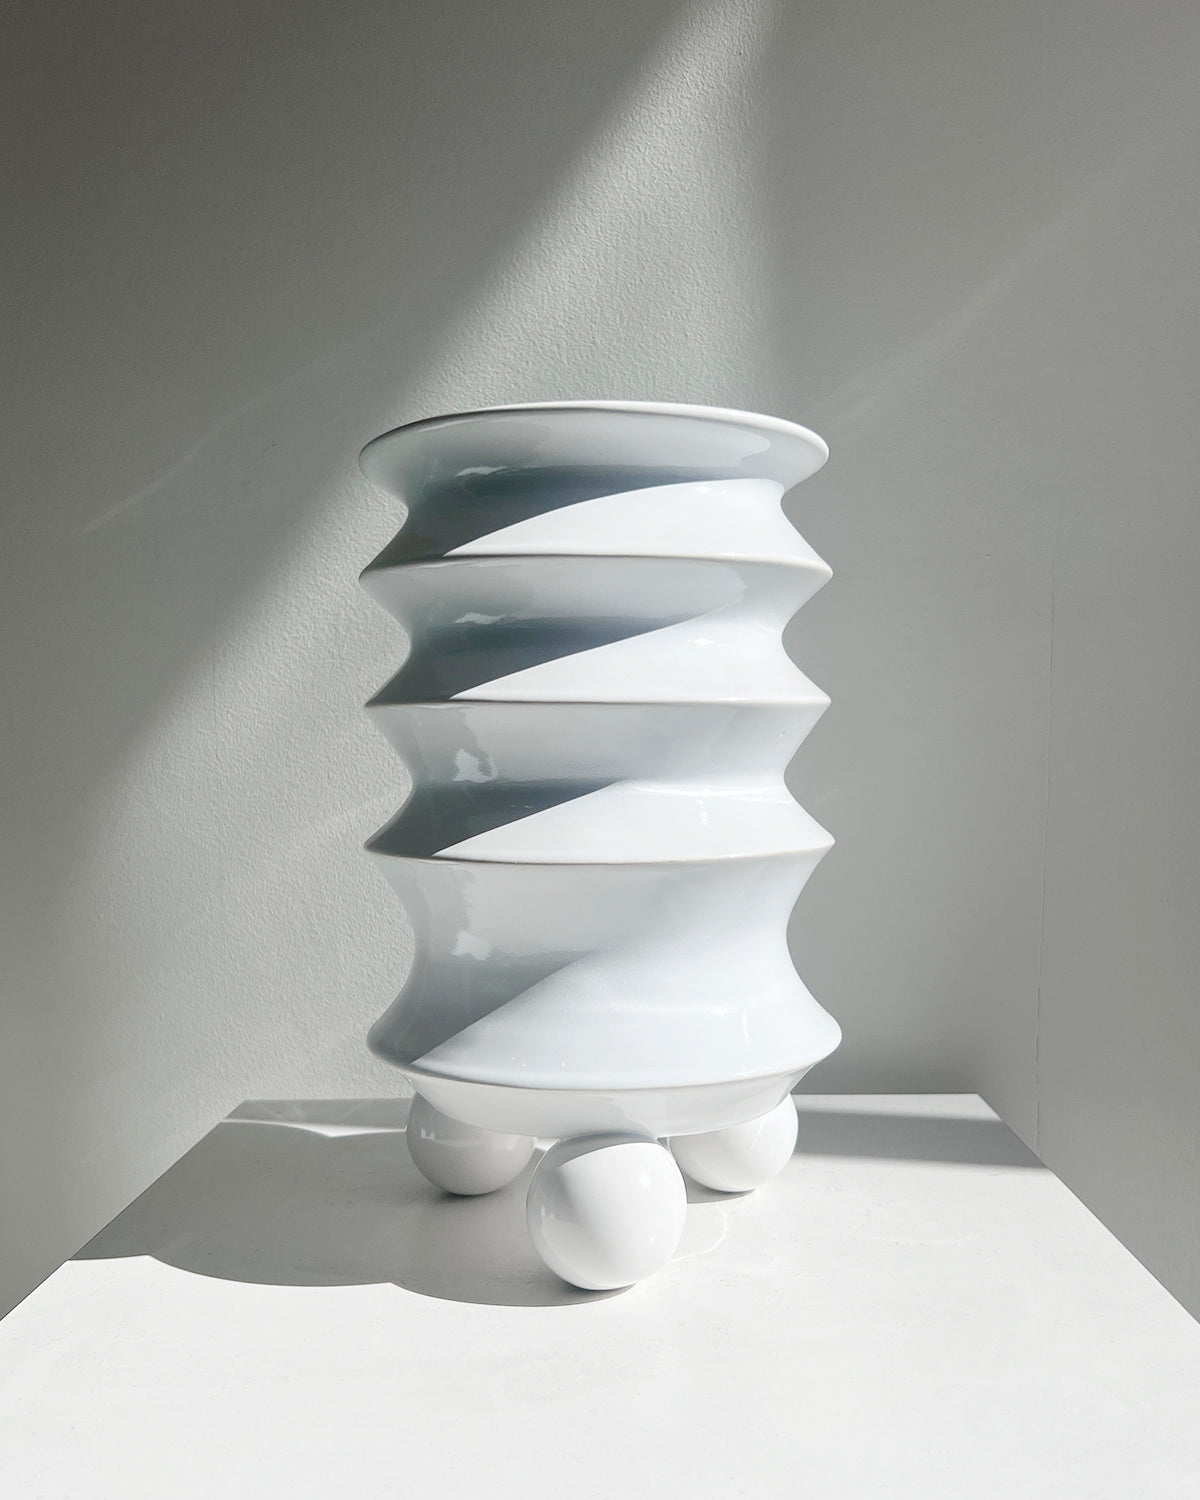 SALE First Edition Toltec Pop Art Ceramic Vase White